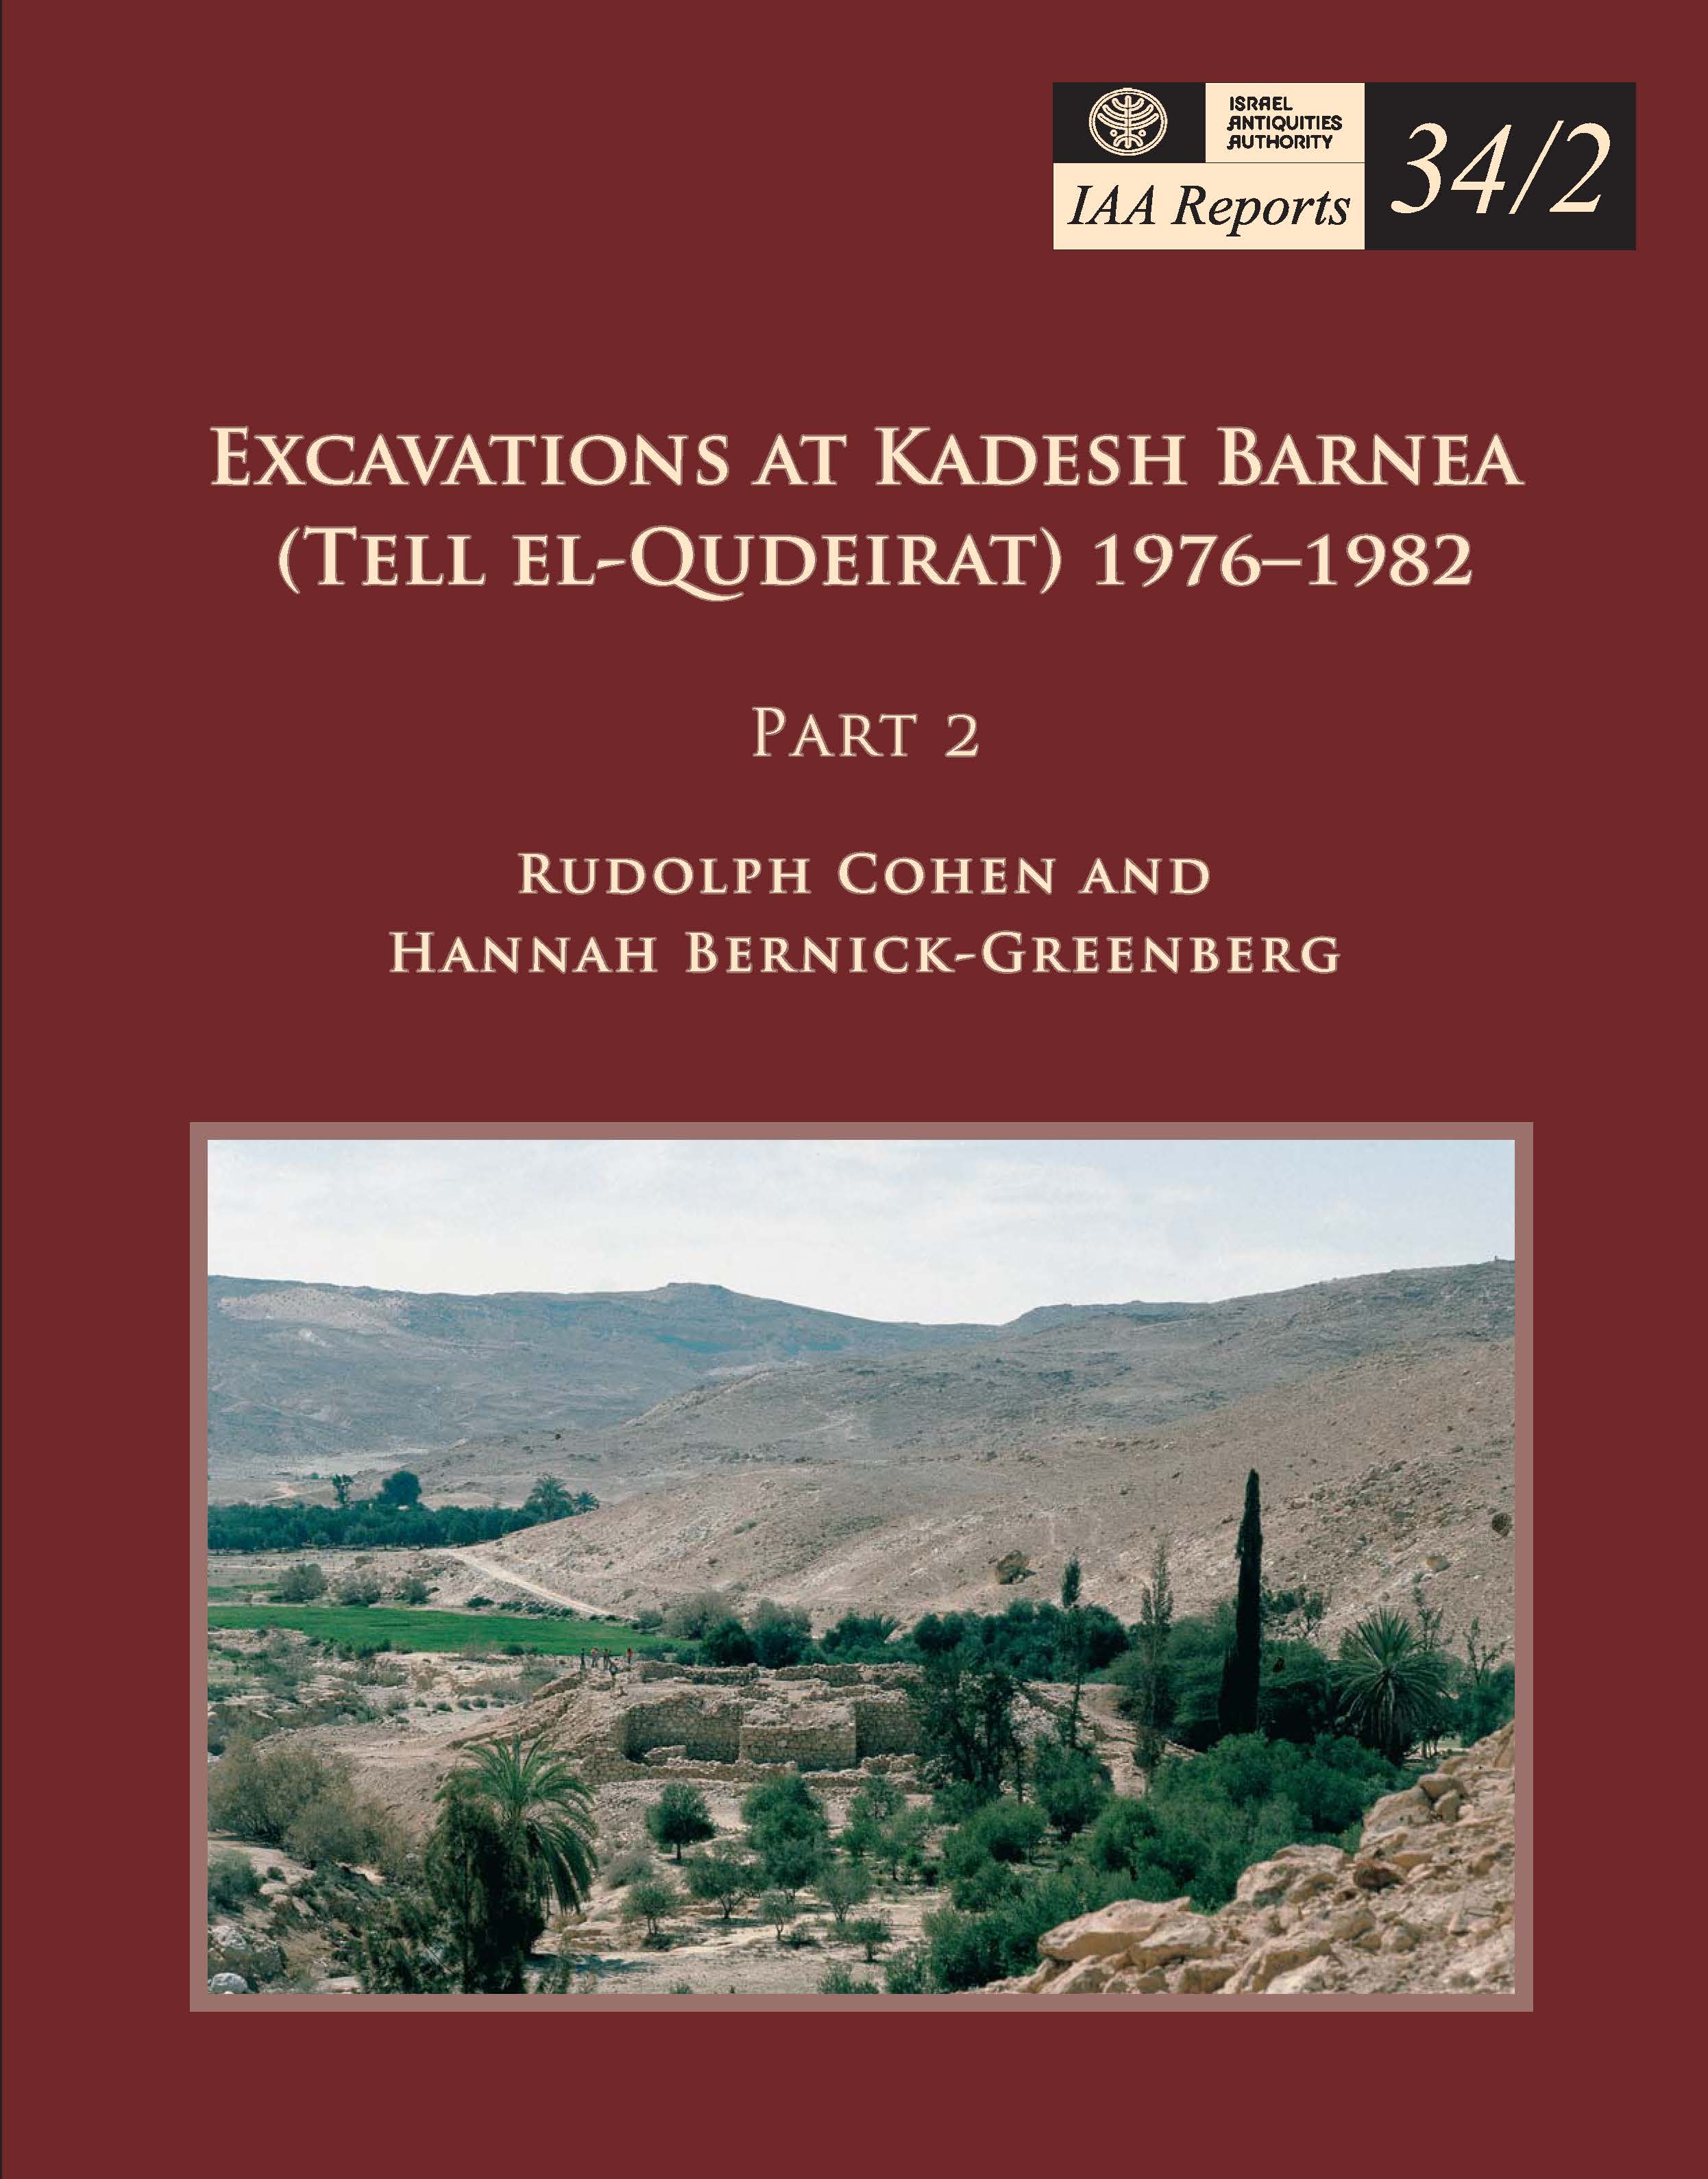 IAA Reports 34/2 חפירות בקדש ברנע ( תל אל קודיראת ) 1976- 1982, חלק 2 